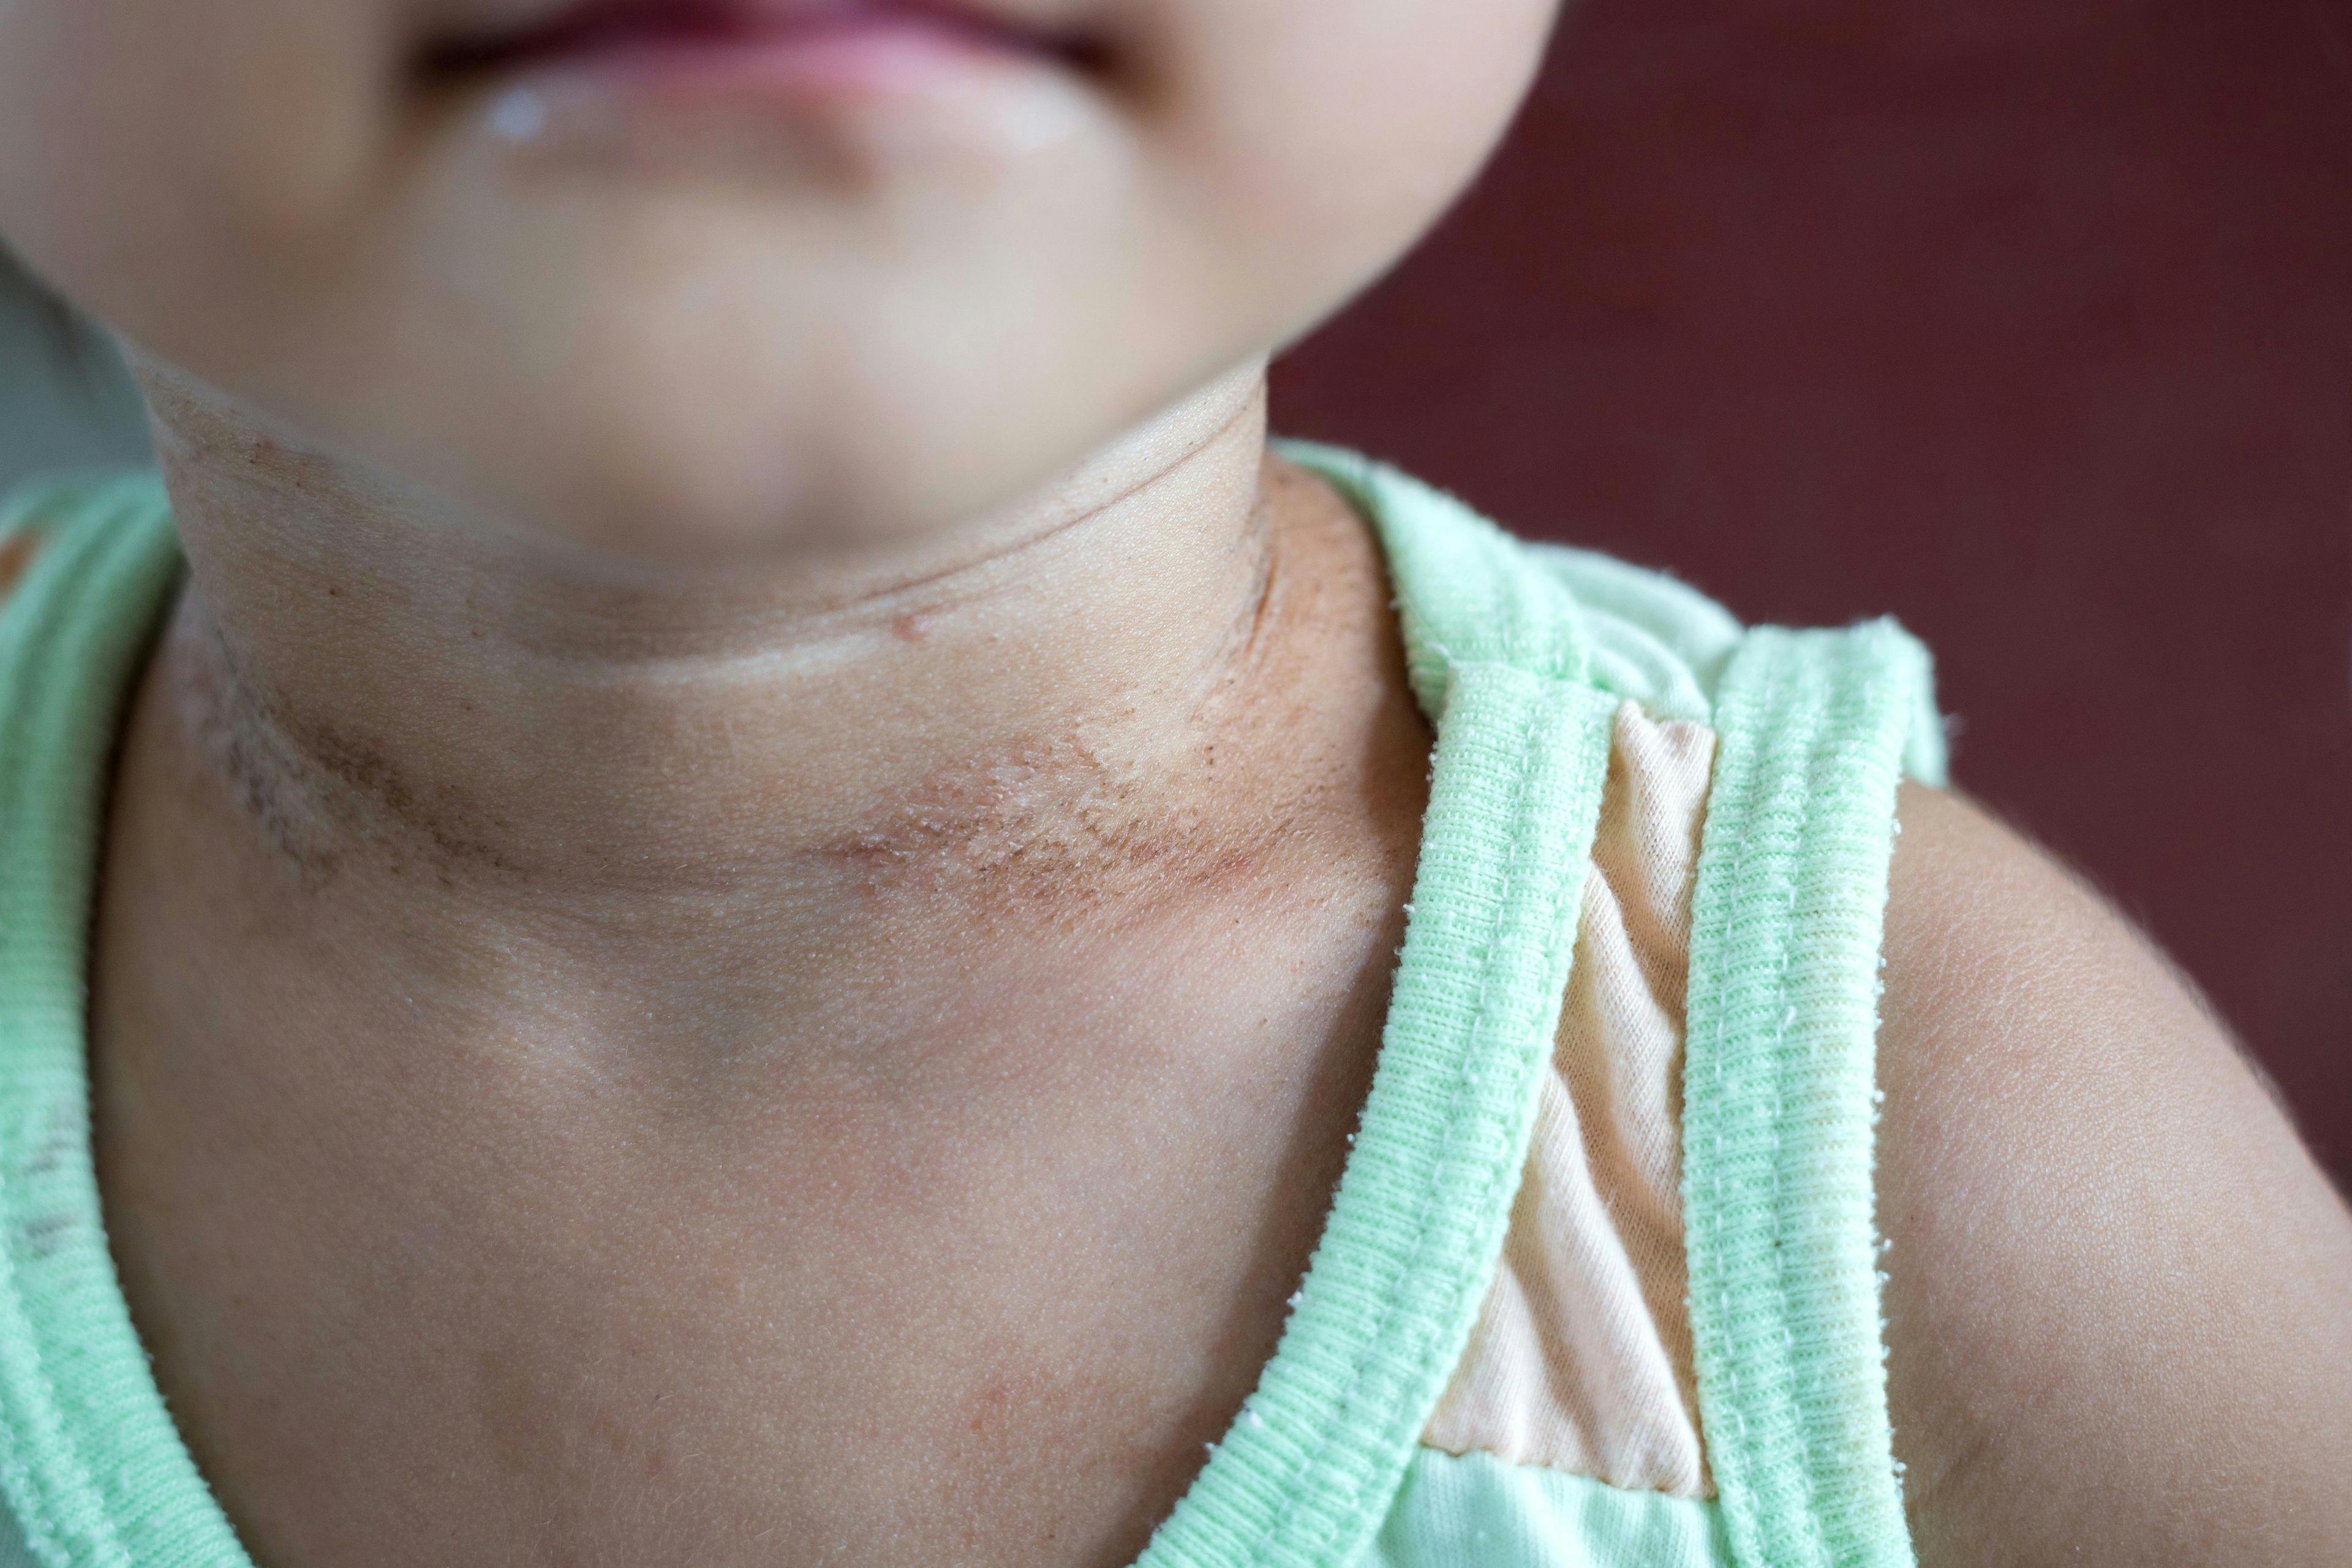 Pediatric patient with atopic dermatitis on the neck | Image Credit: © abimagestudio - stock.adobe.com